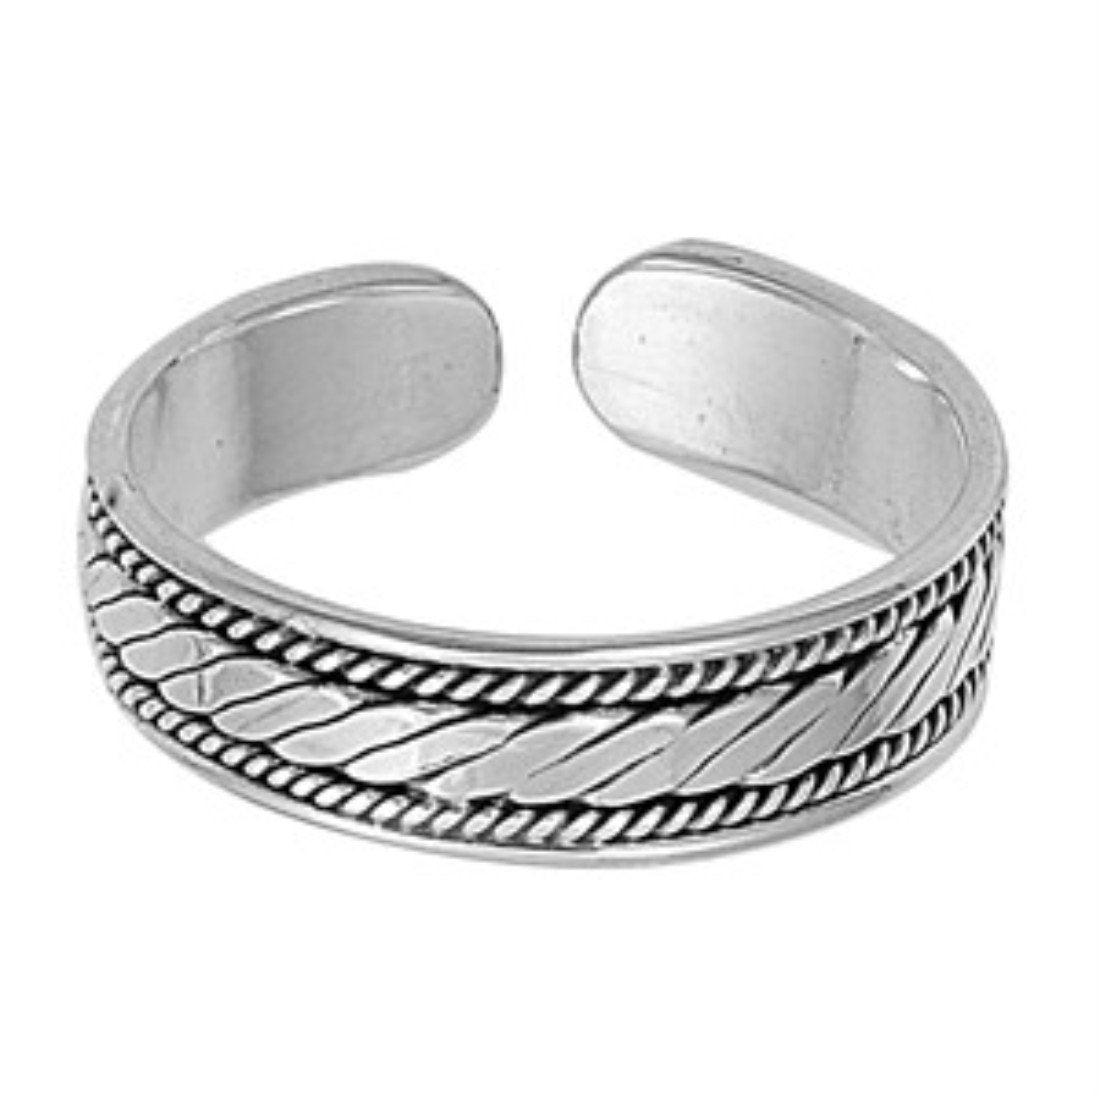 Adjustable Bali Design Silver Toe Ring 925 Sterling Silver (4mm)